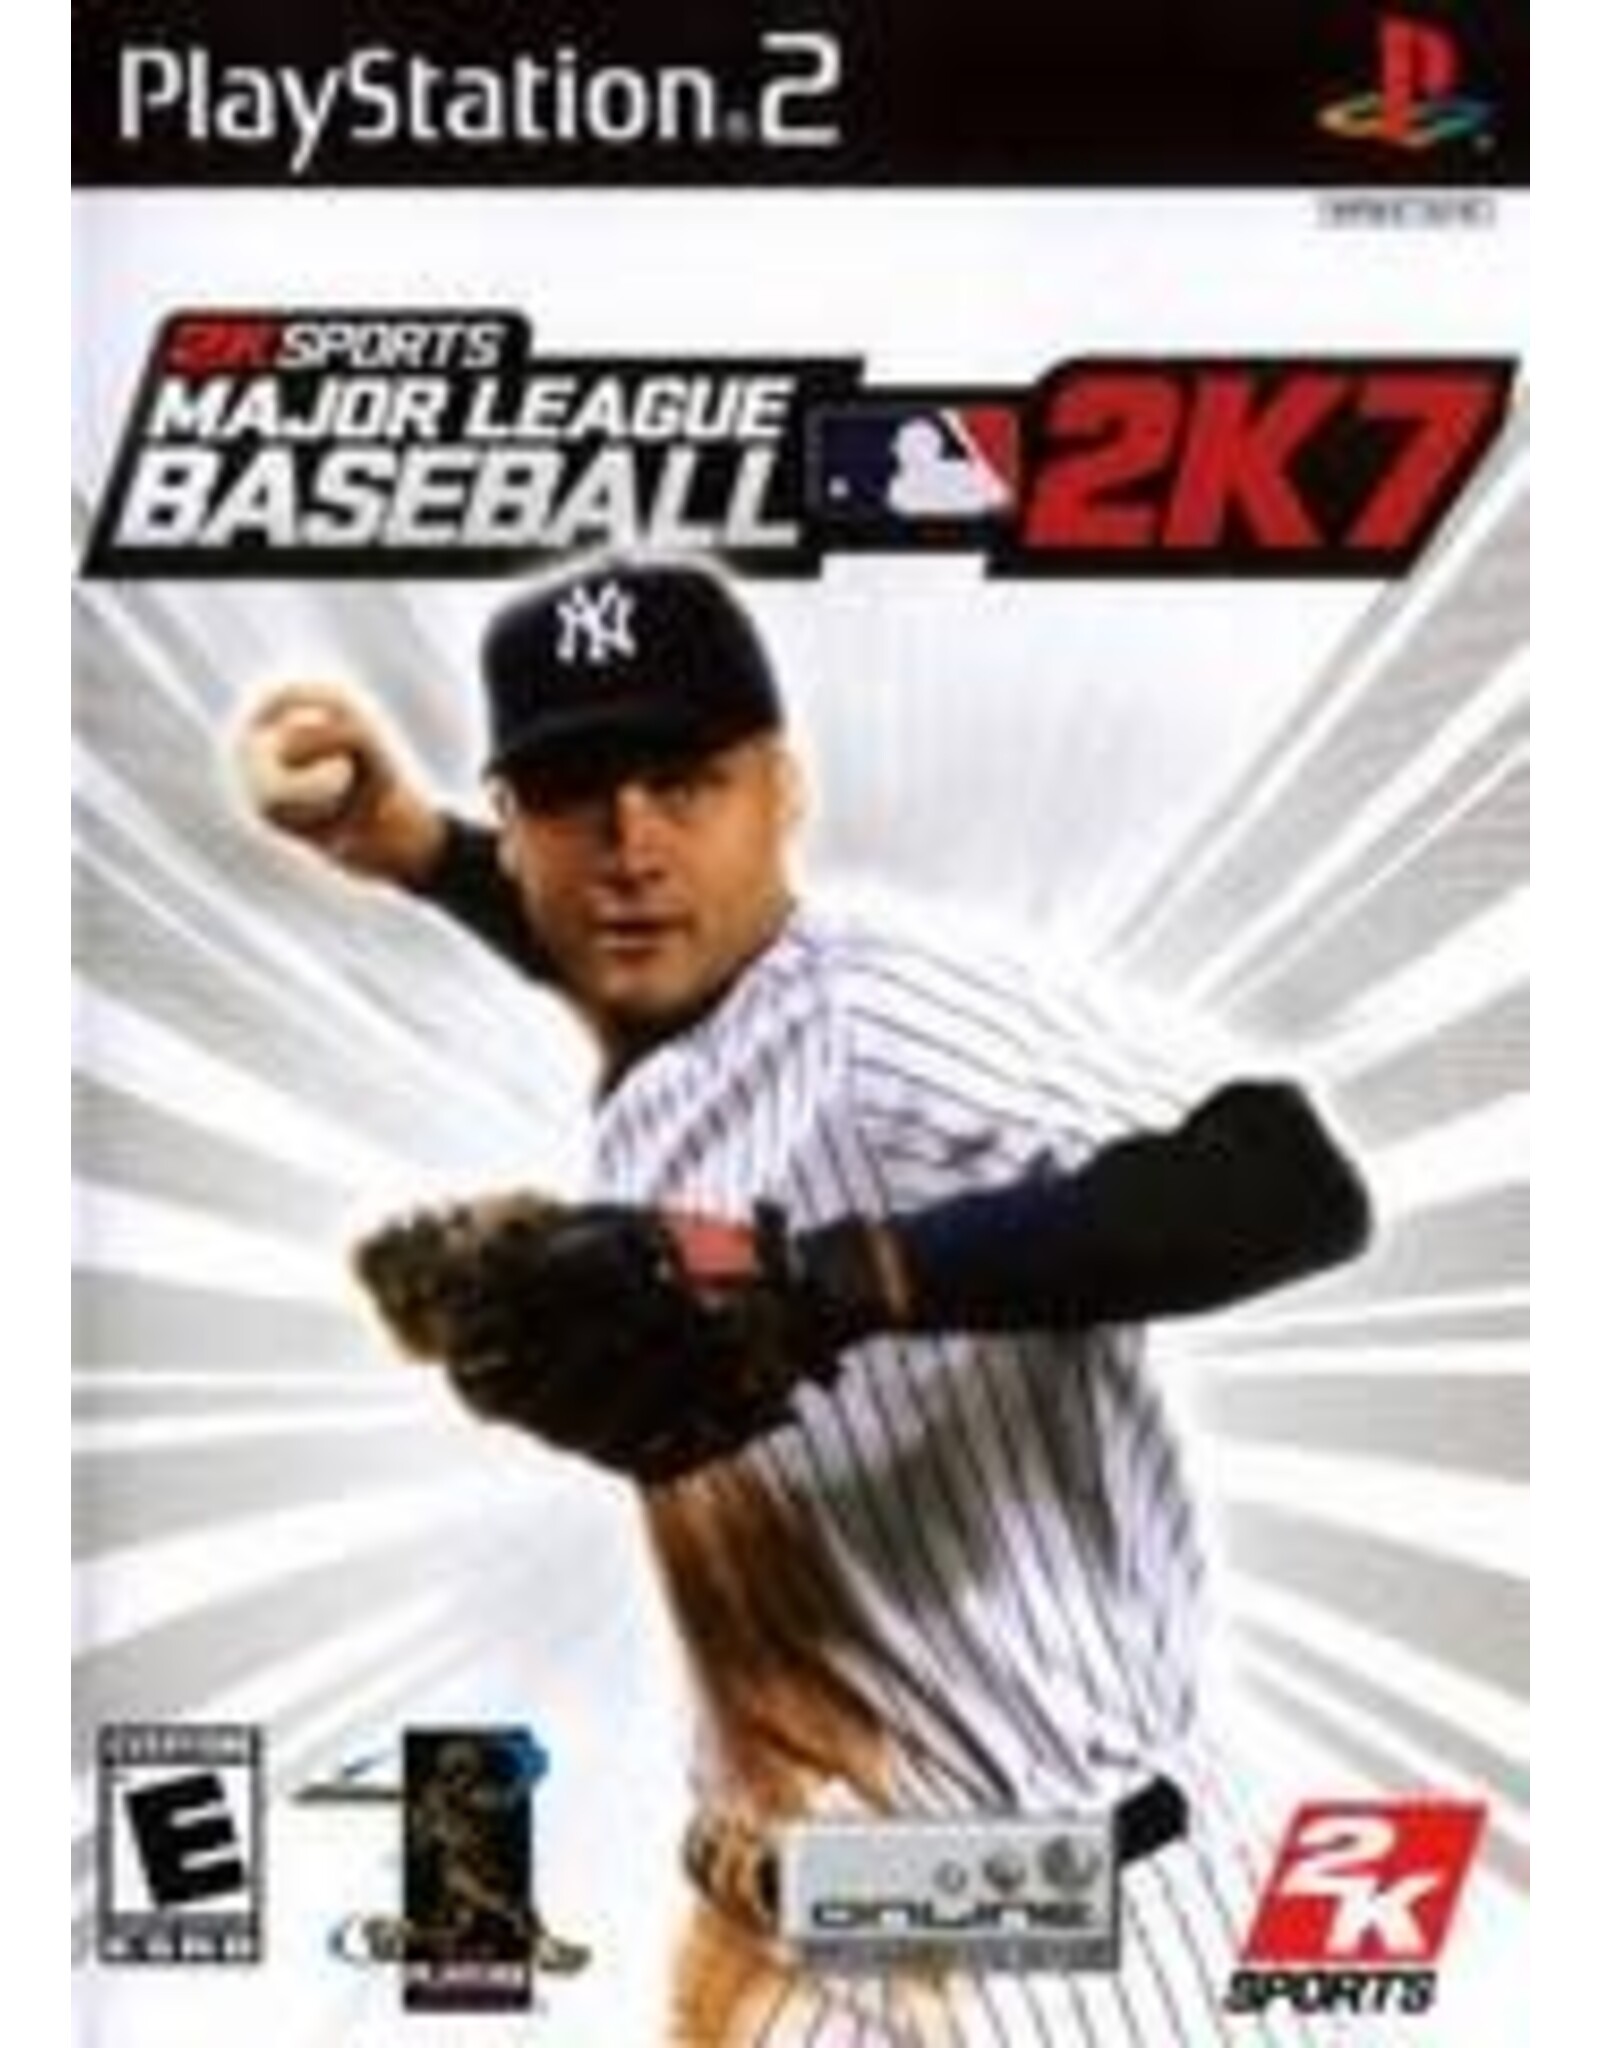 Playstation 2 Major League Baseball 2K7 (CiB)